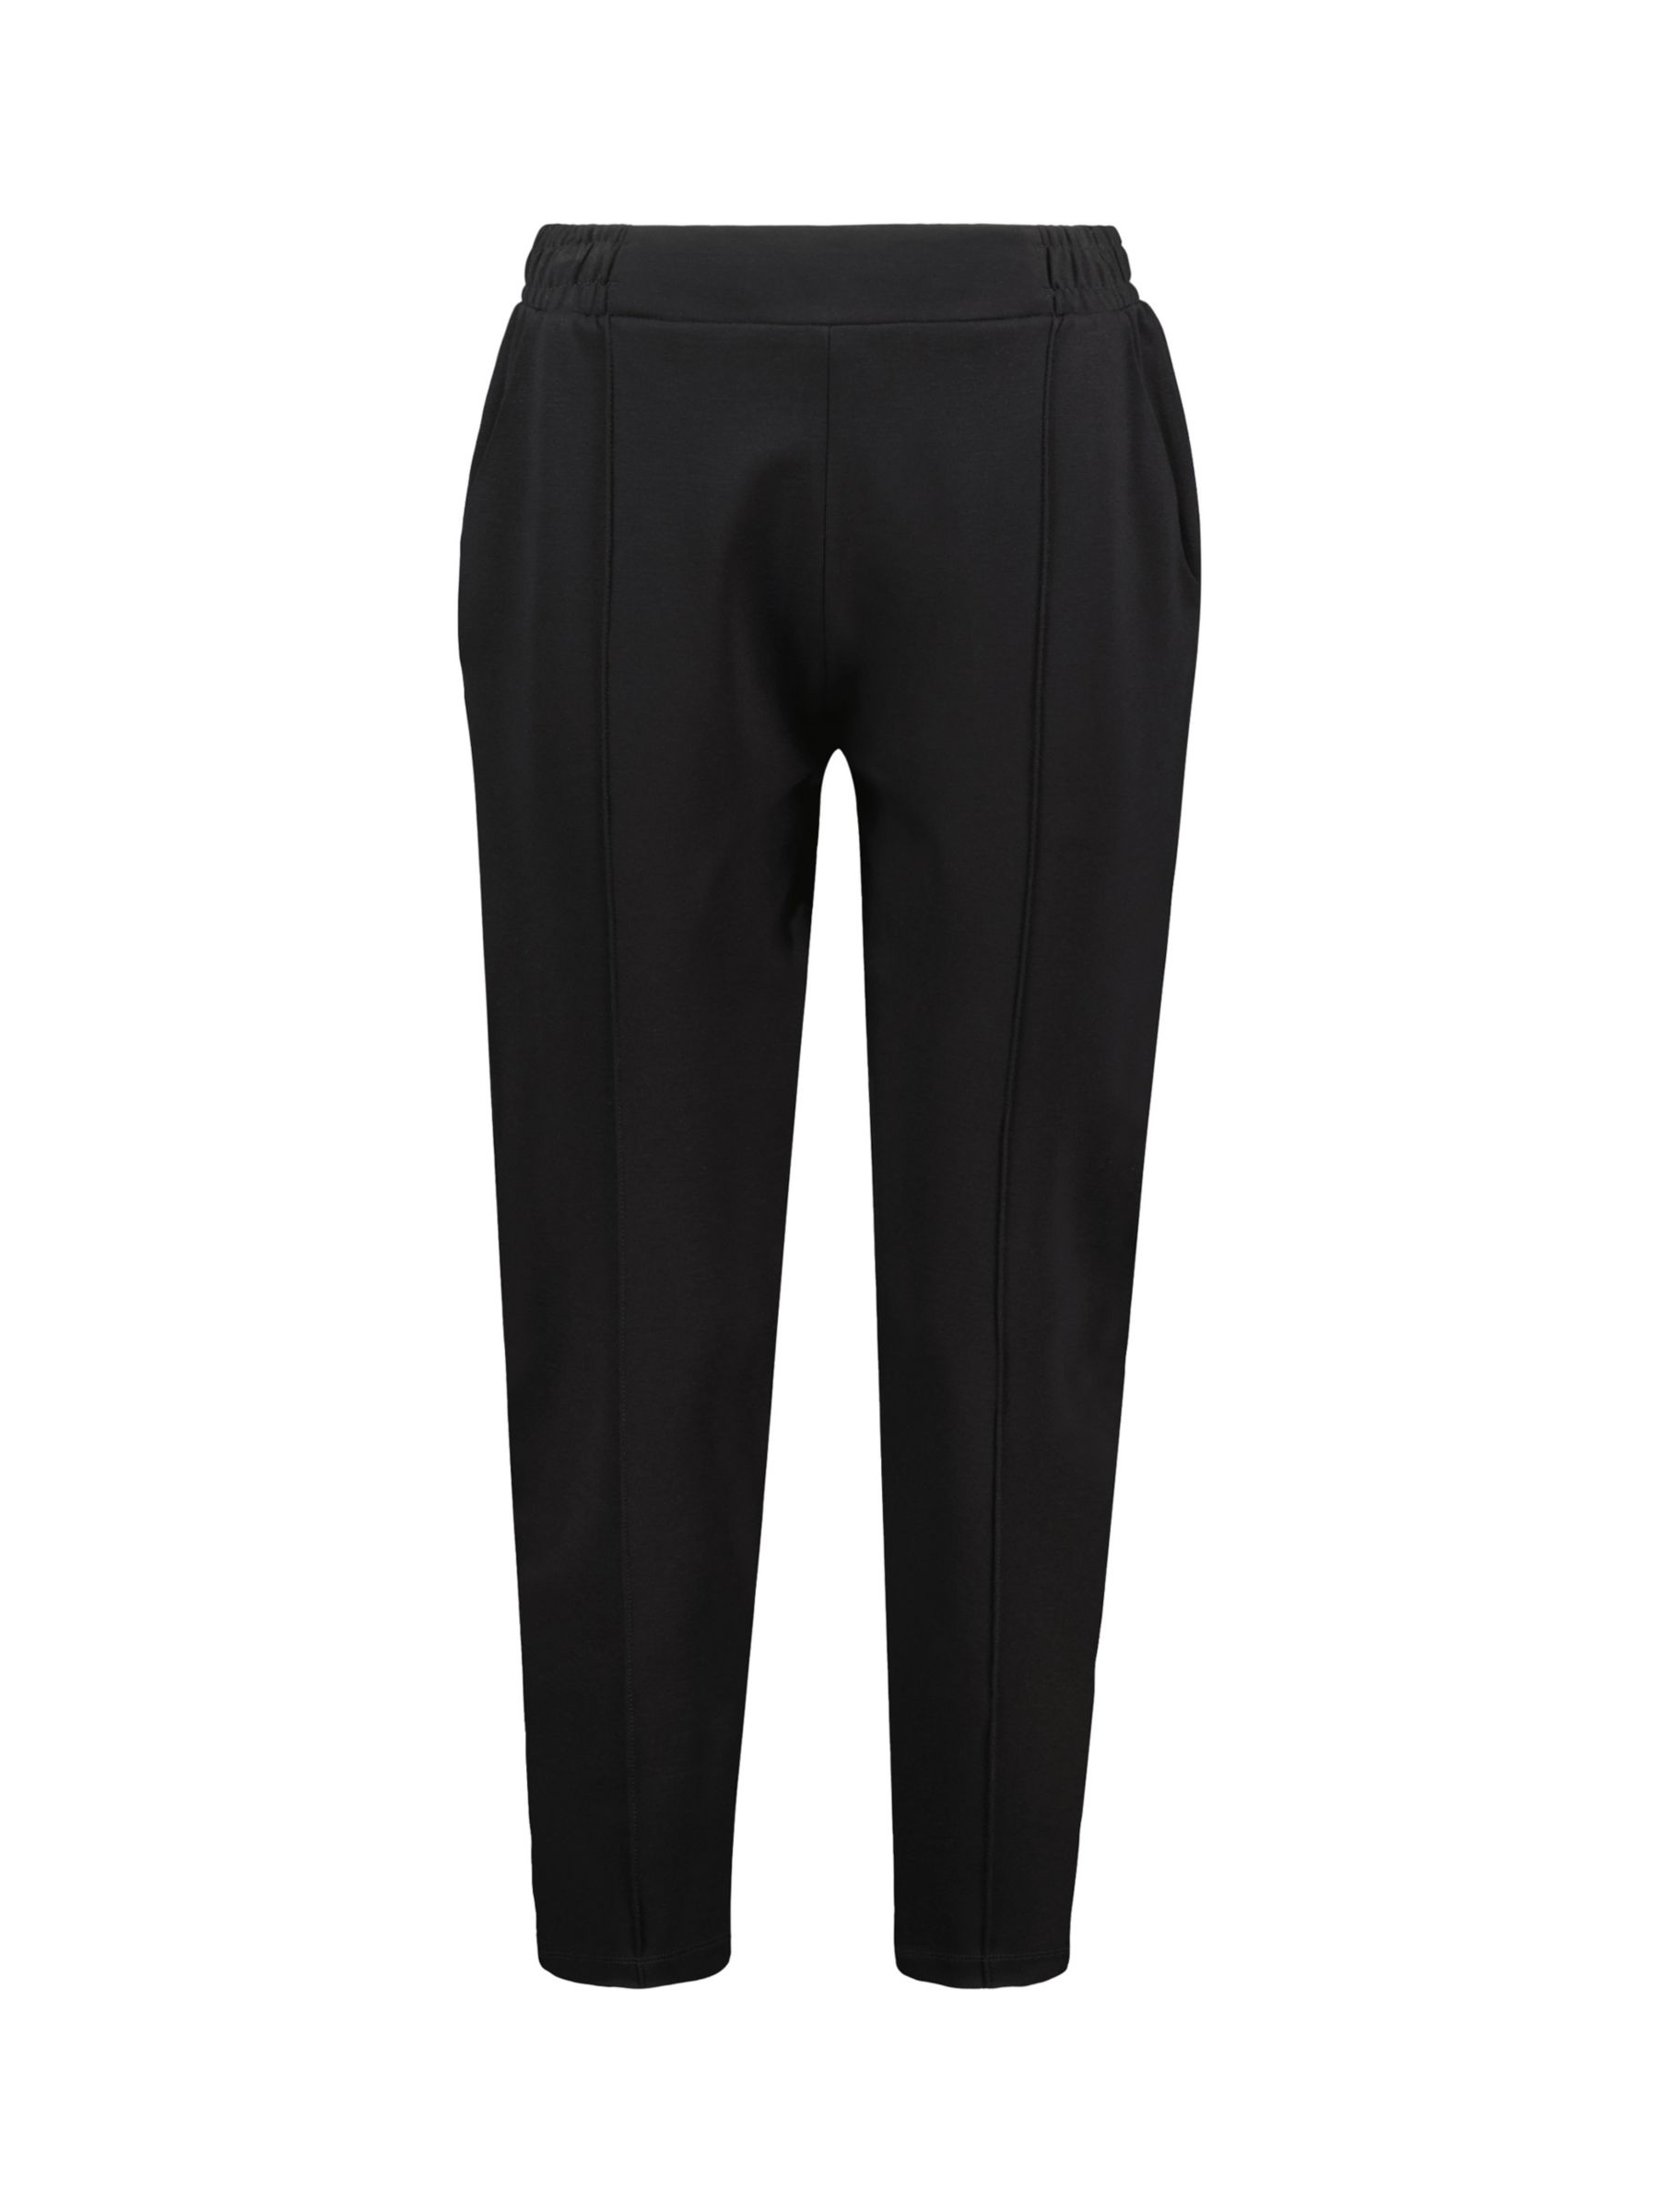 Buy Baukjen Elizabeth Tailored Trousers, Caviar Black Online at johnlewis.com